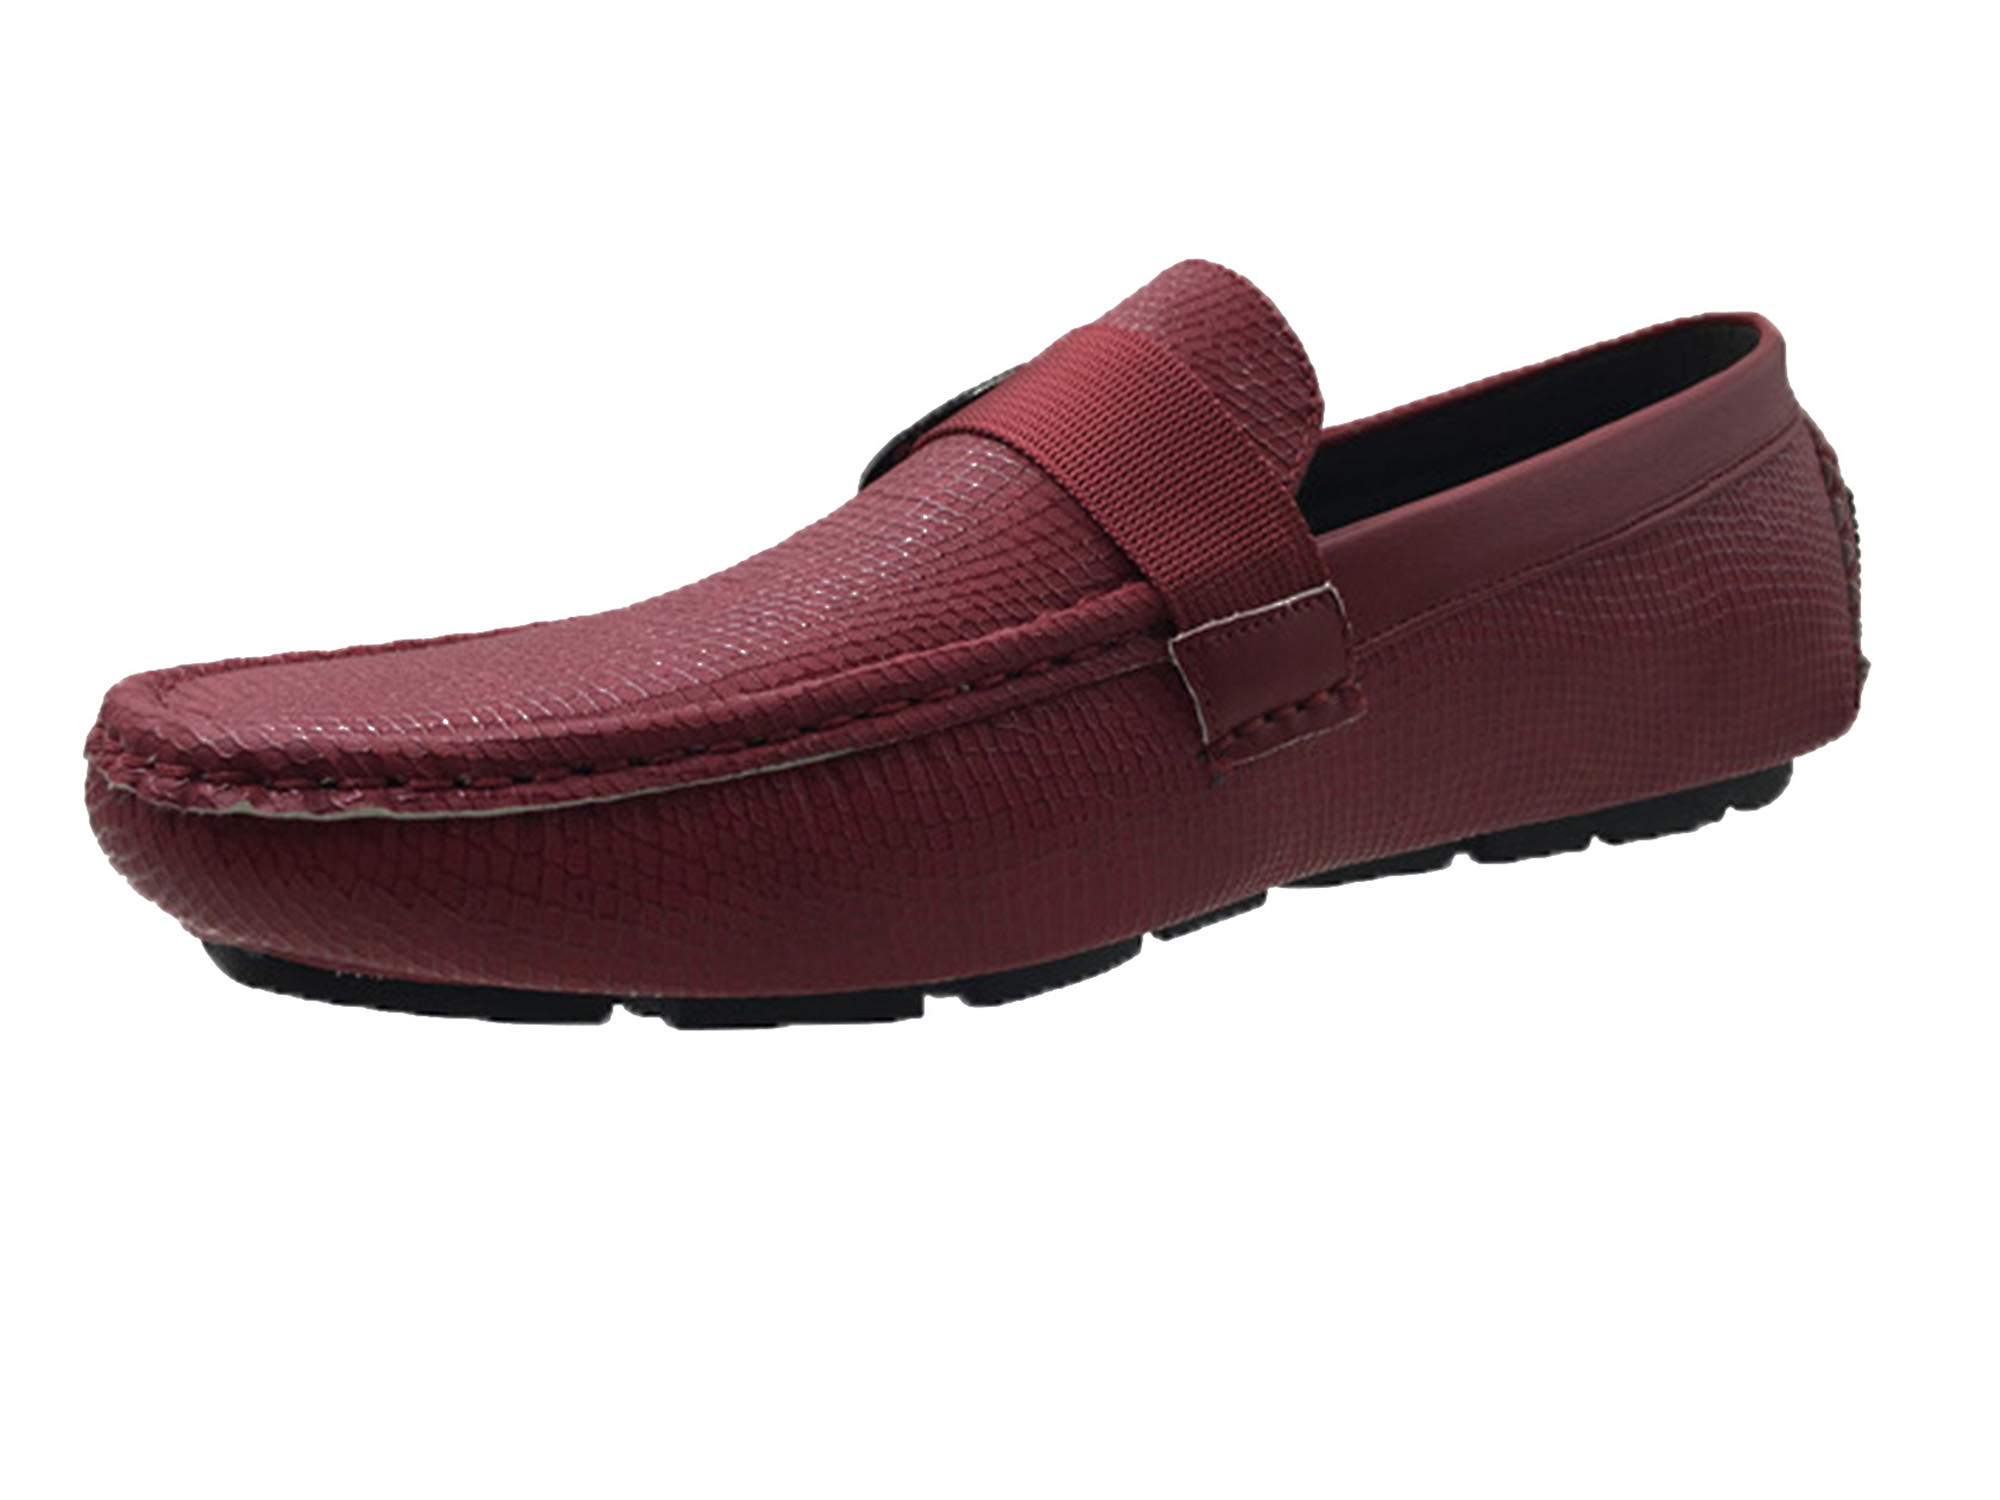 Mecca ME-4103 NORM Mens Belt Strap Slip-On Loafers Shoes - image 3 of 8